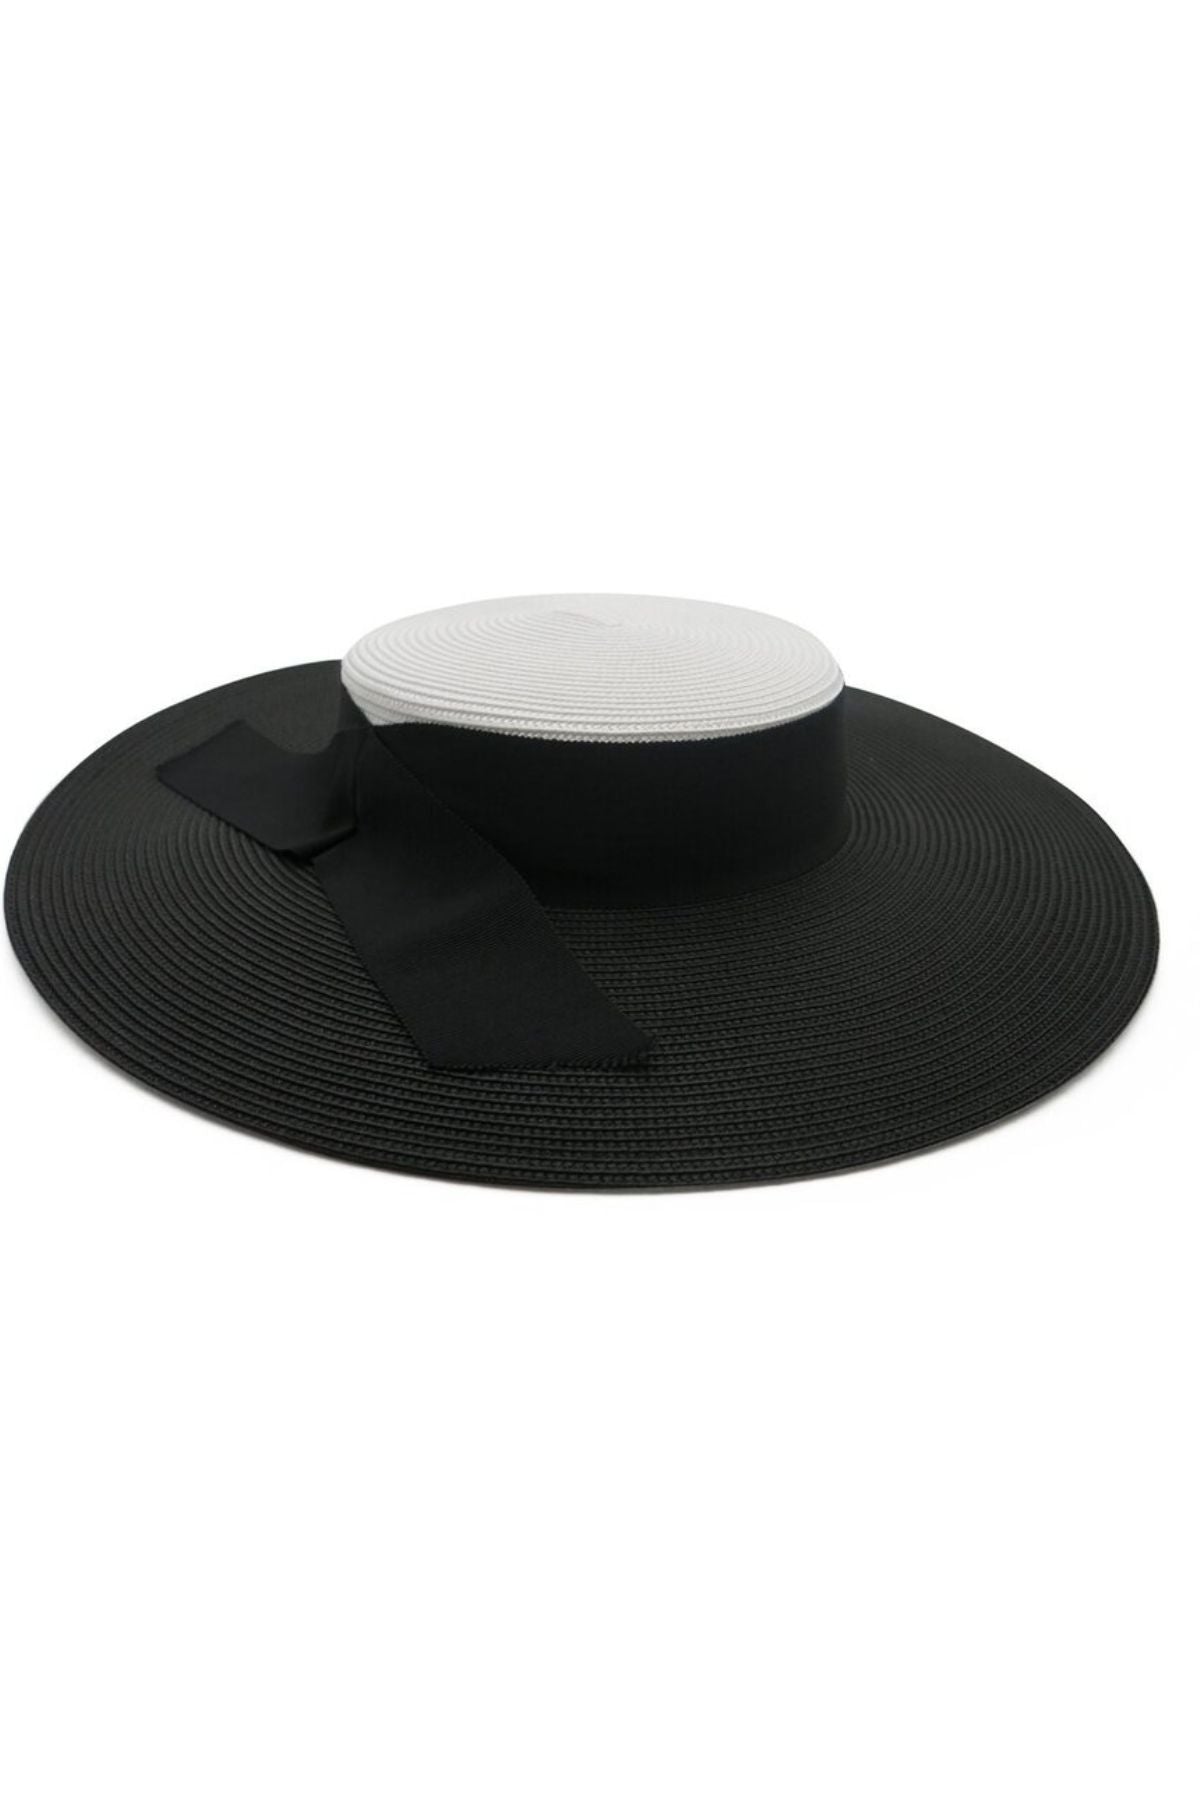 Morgan and Taylor Hire MORGAN & TAYLOR Azaria Boater Hat (Black/ White) - 7_5fd4a6d3-4d65-41f2-83ba-28036c5b80b2.jpg